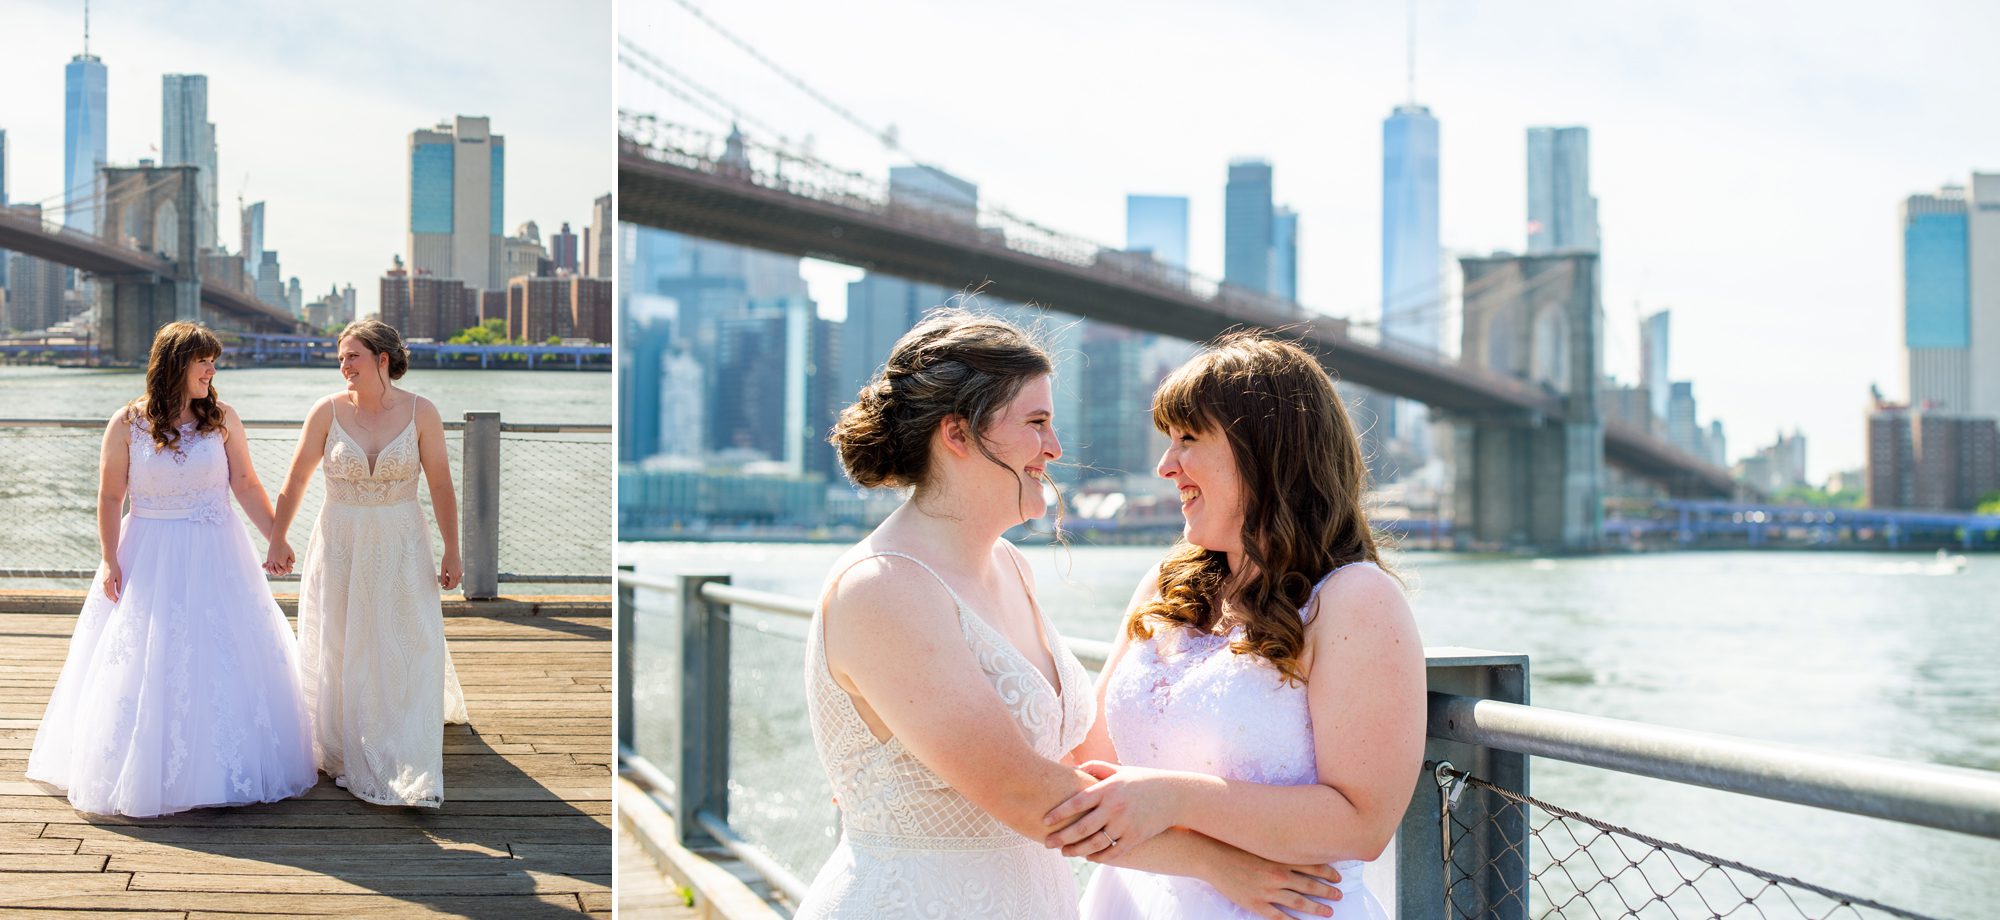 Wedding Photos with Two Brides in Brooklyn Bridge Park 